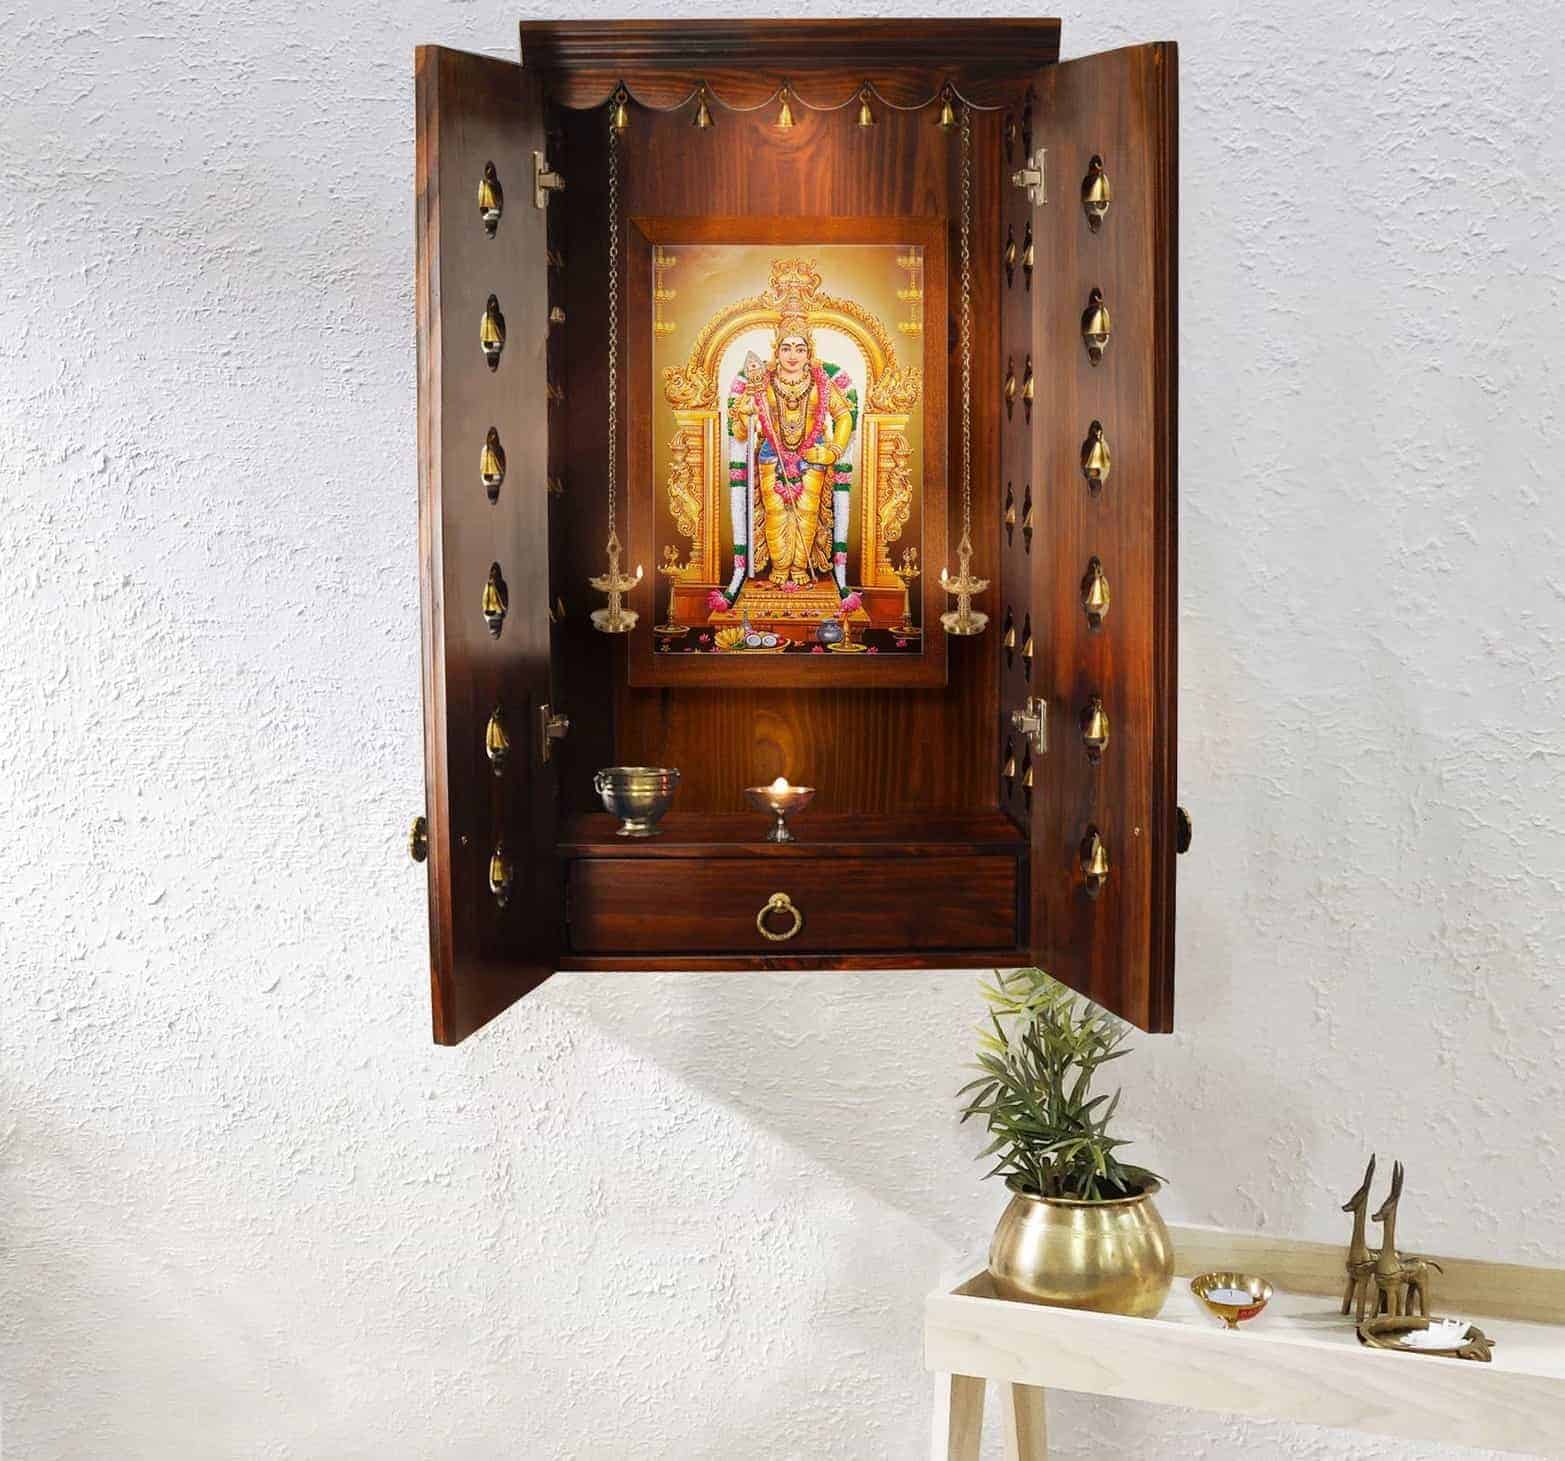 wooden mandir with multiple bells, ganesha idol